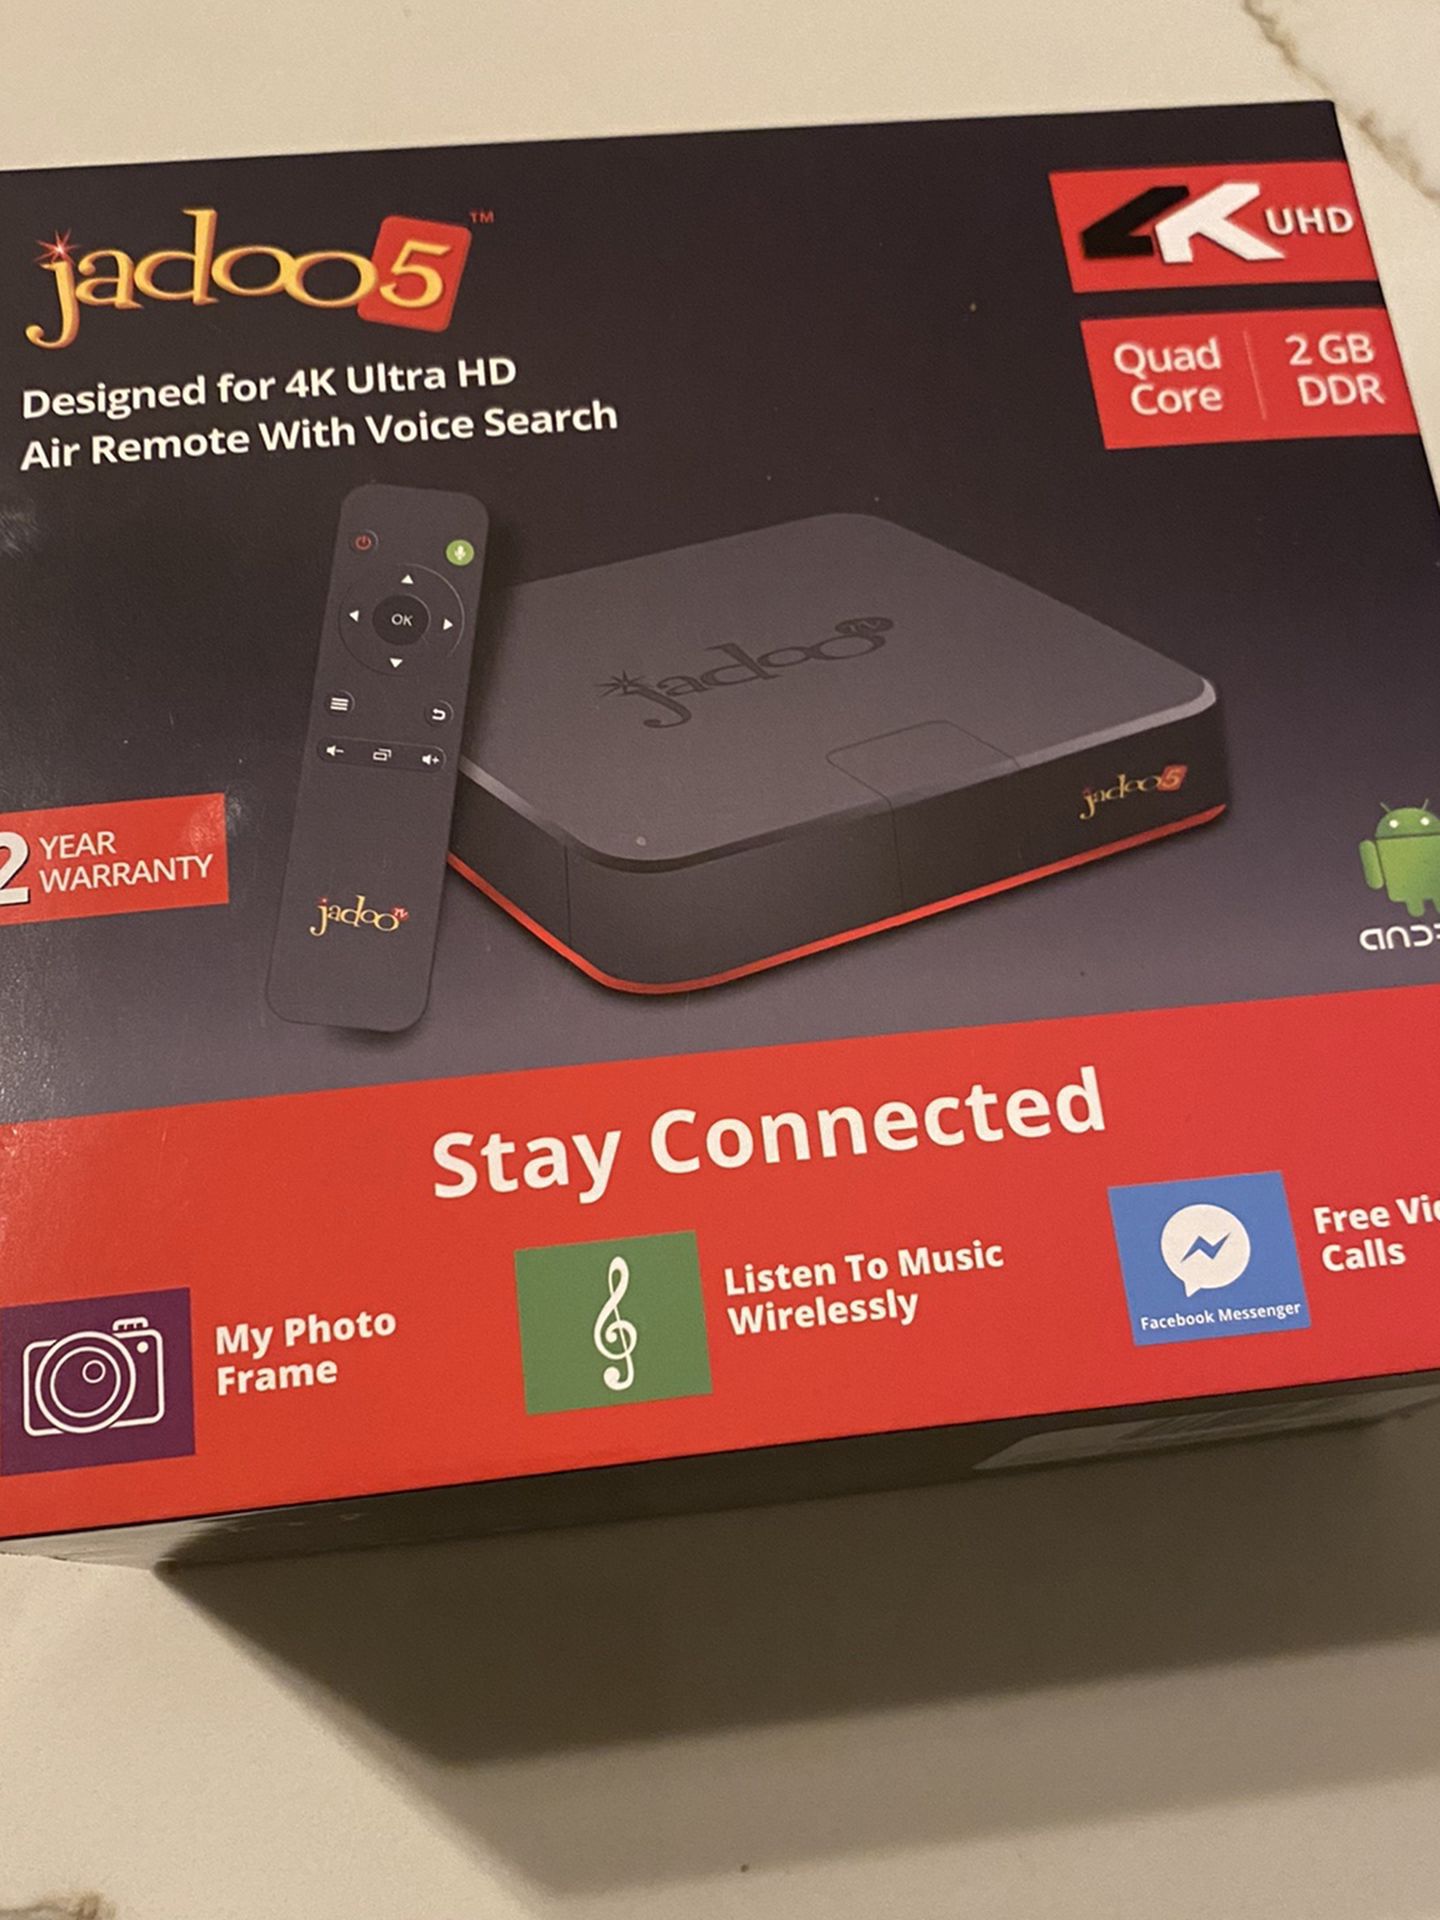 Jadoo 5 Tv Box - Brand New Never Used!